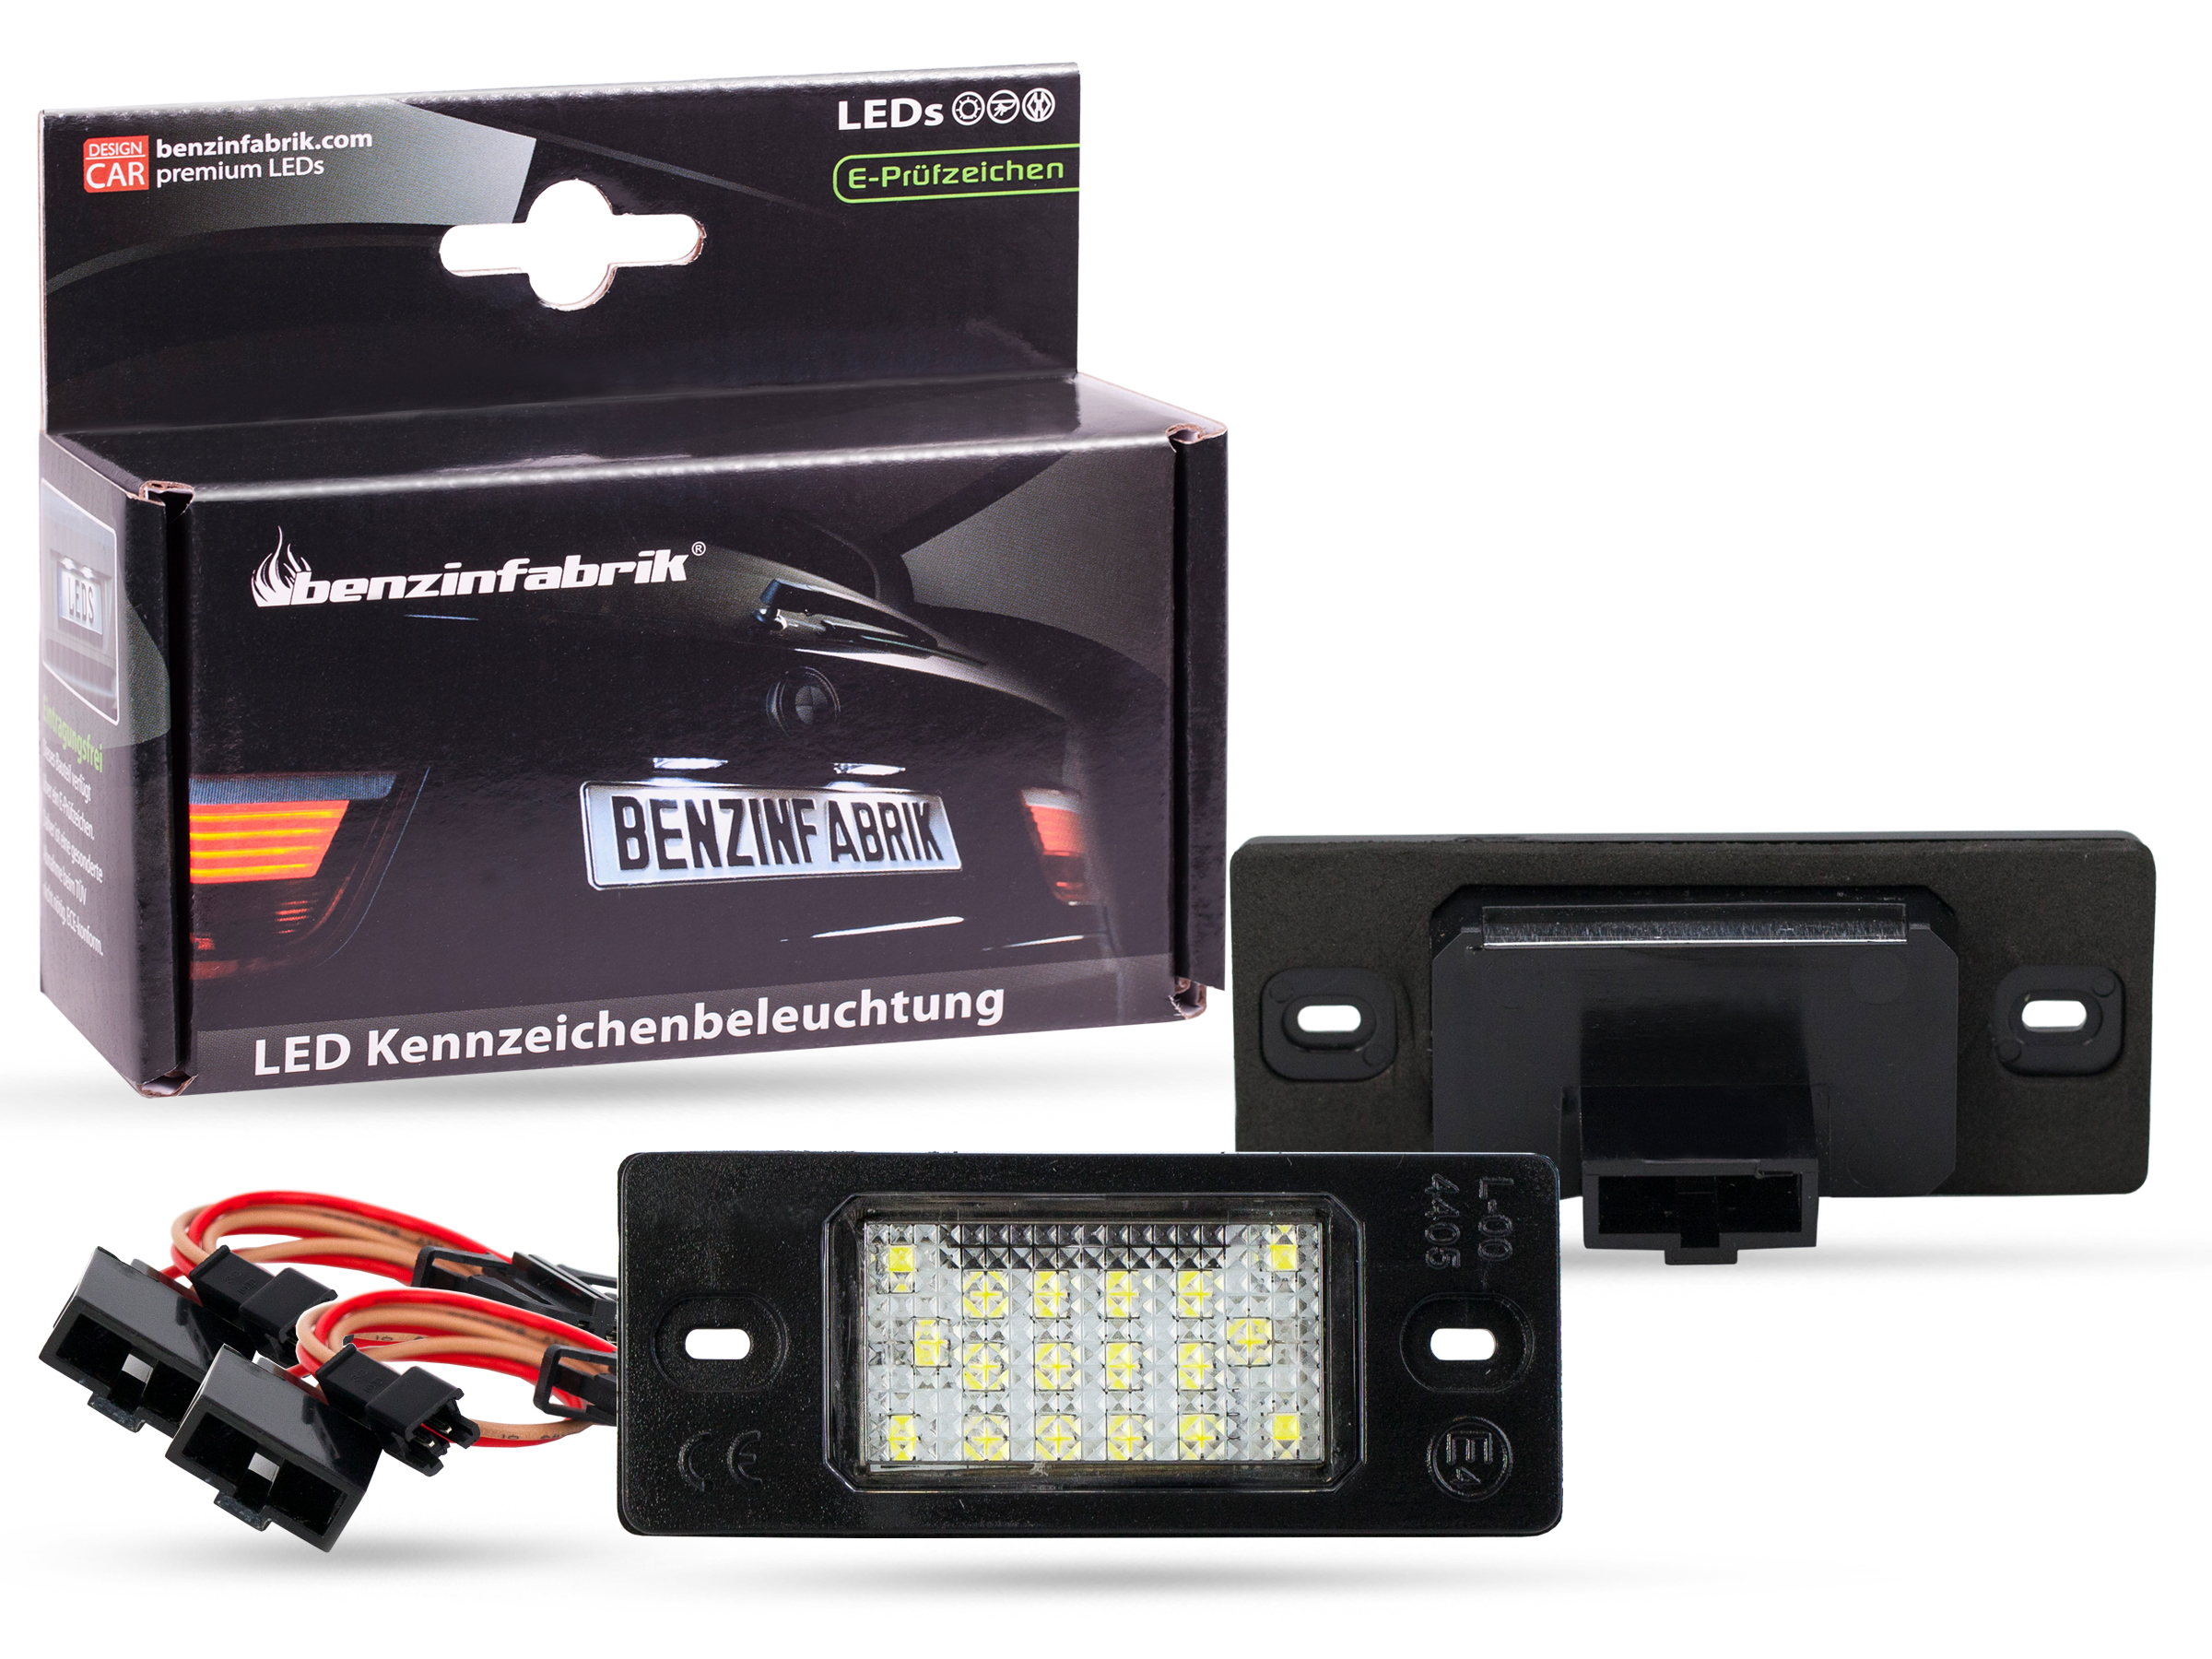 LED Kennzeichenbeleuchtung Module VW Golf 5 V Variant, mit E-Prüfzeichen, LED Kennzeichenbeleuchtung für VW, LED Kennzeichenbeleuchtung